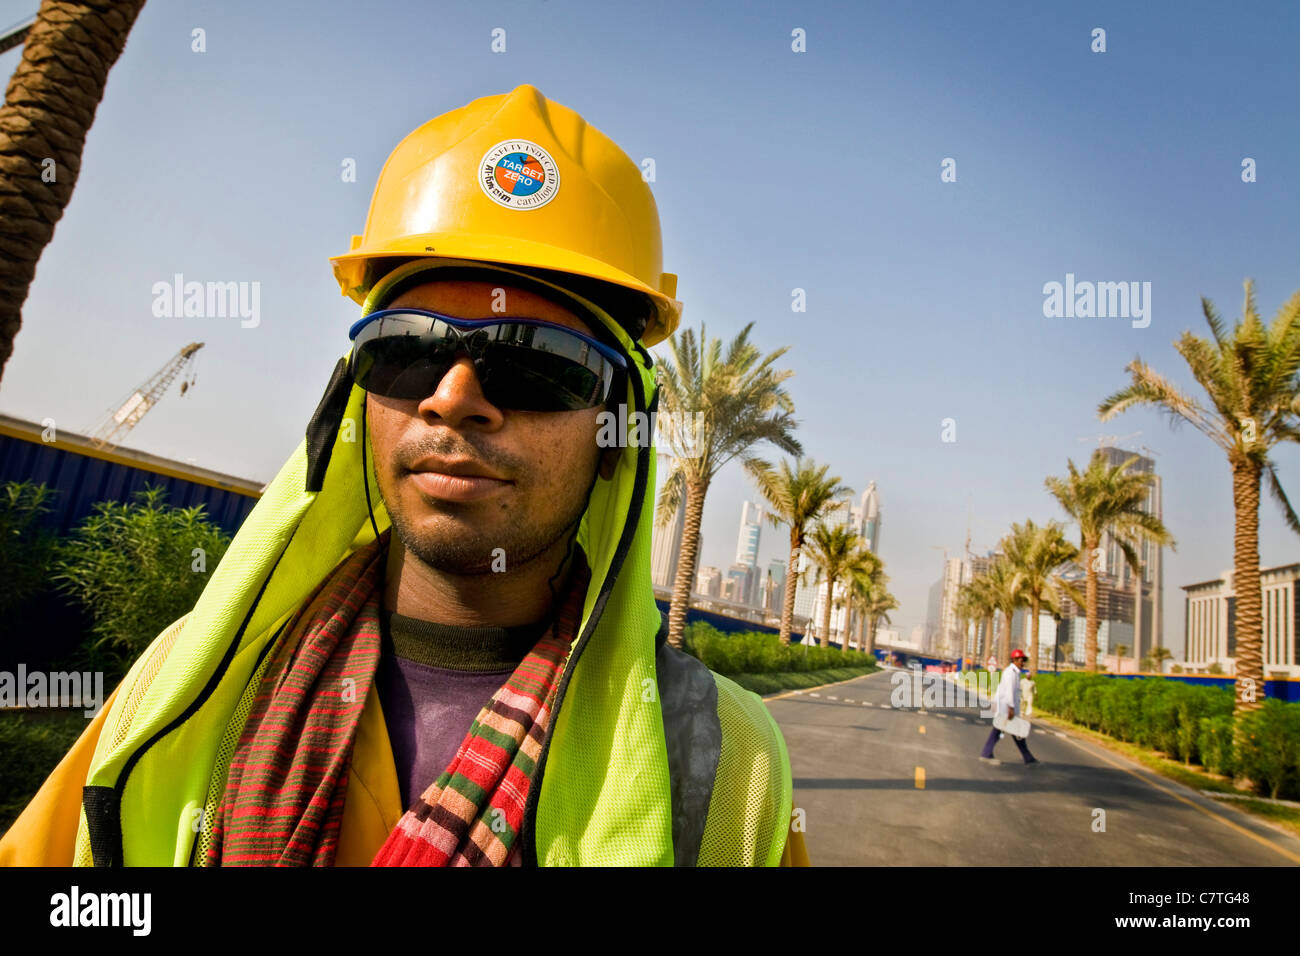 Emirats Arabes Unis, Dubai, pakistani worker at building site of Media city Stock Photo